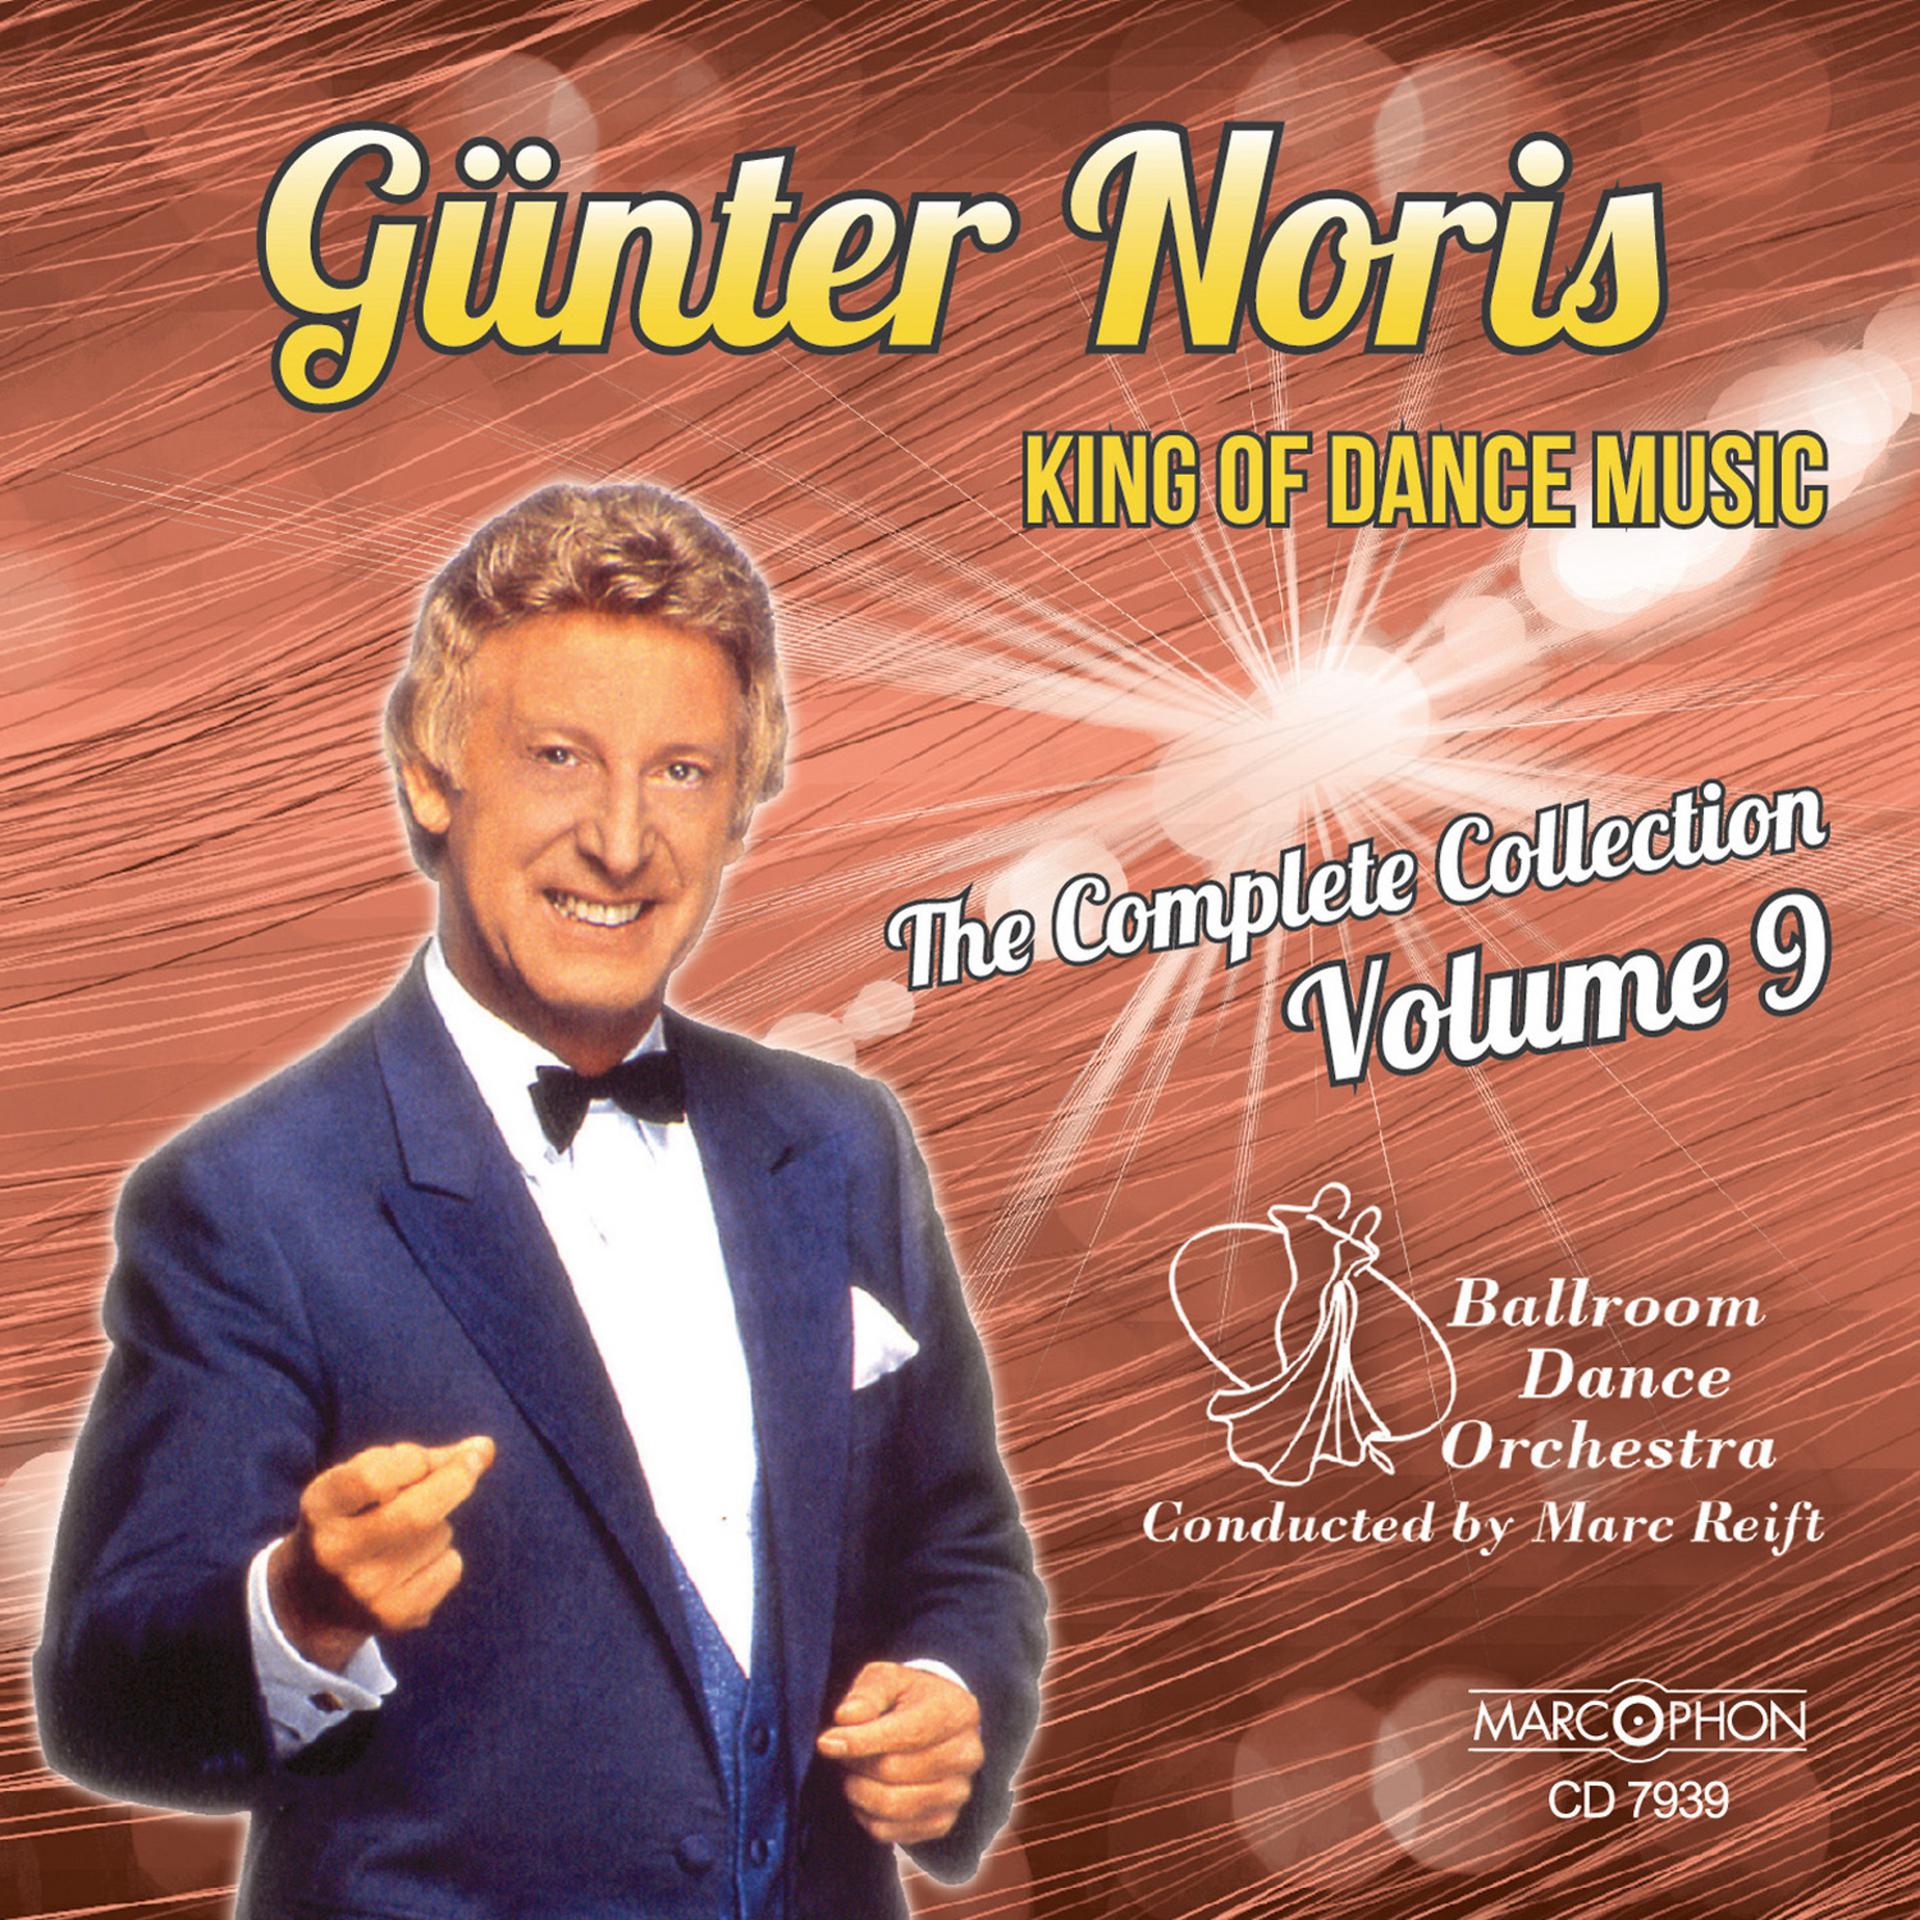 Постер альбома Günter Noris "King of Dance Music" The Complete Collection Volume 9